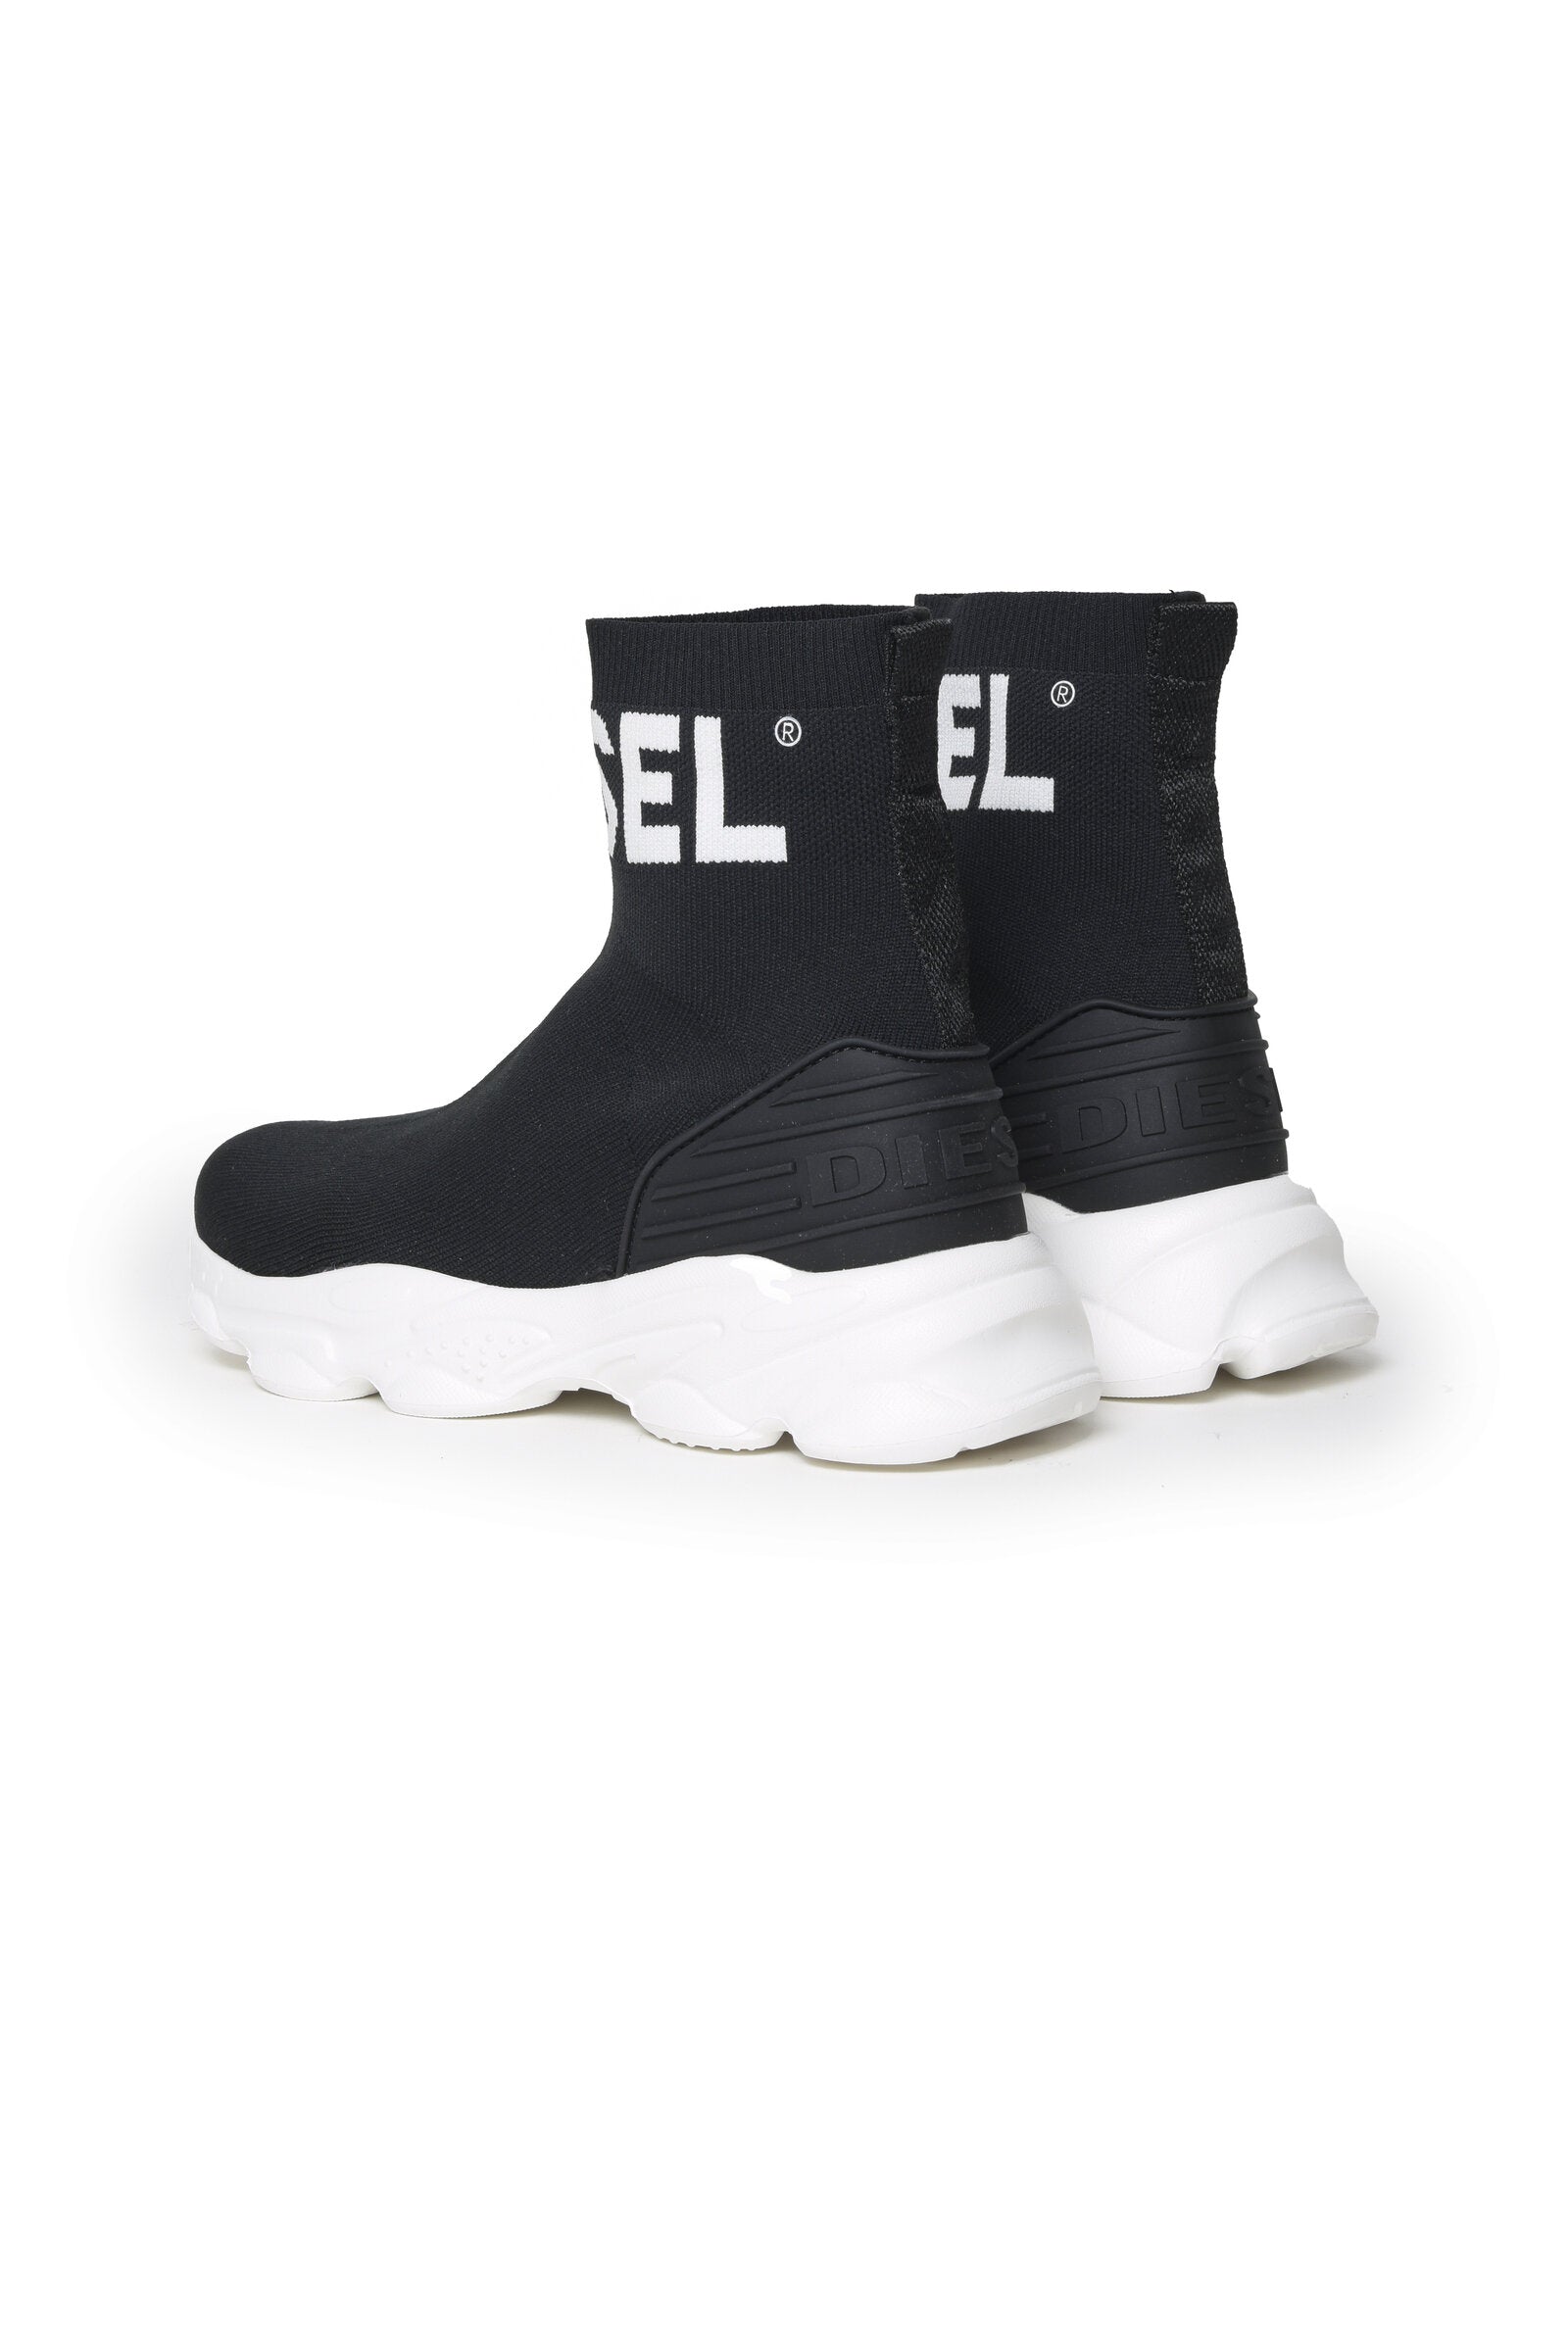 Diesel Serendipity black high sock sneakers with white logo for children